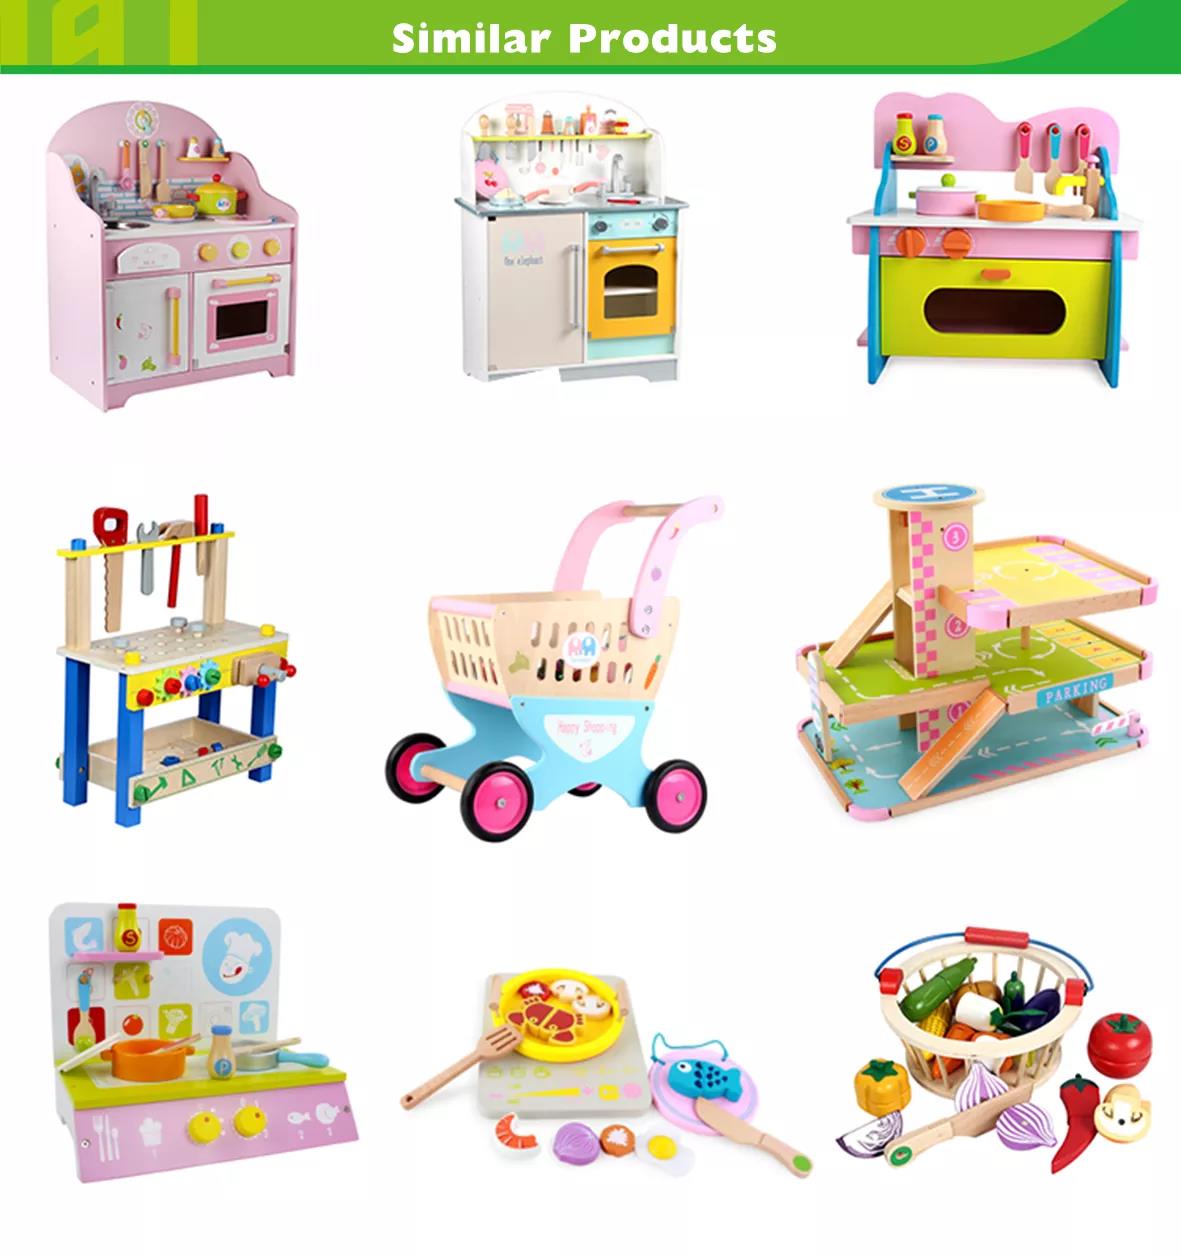 QiaoQiao kids pretend toy kitchen set similar products